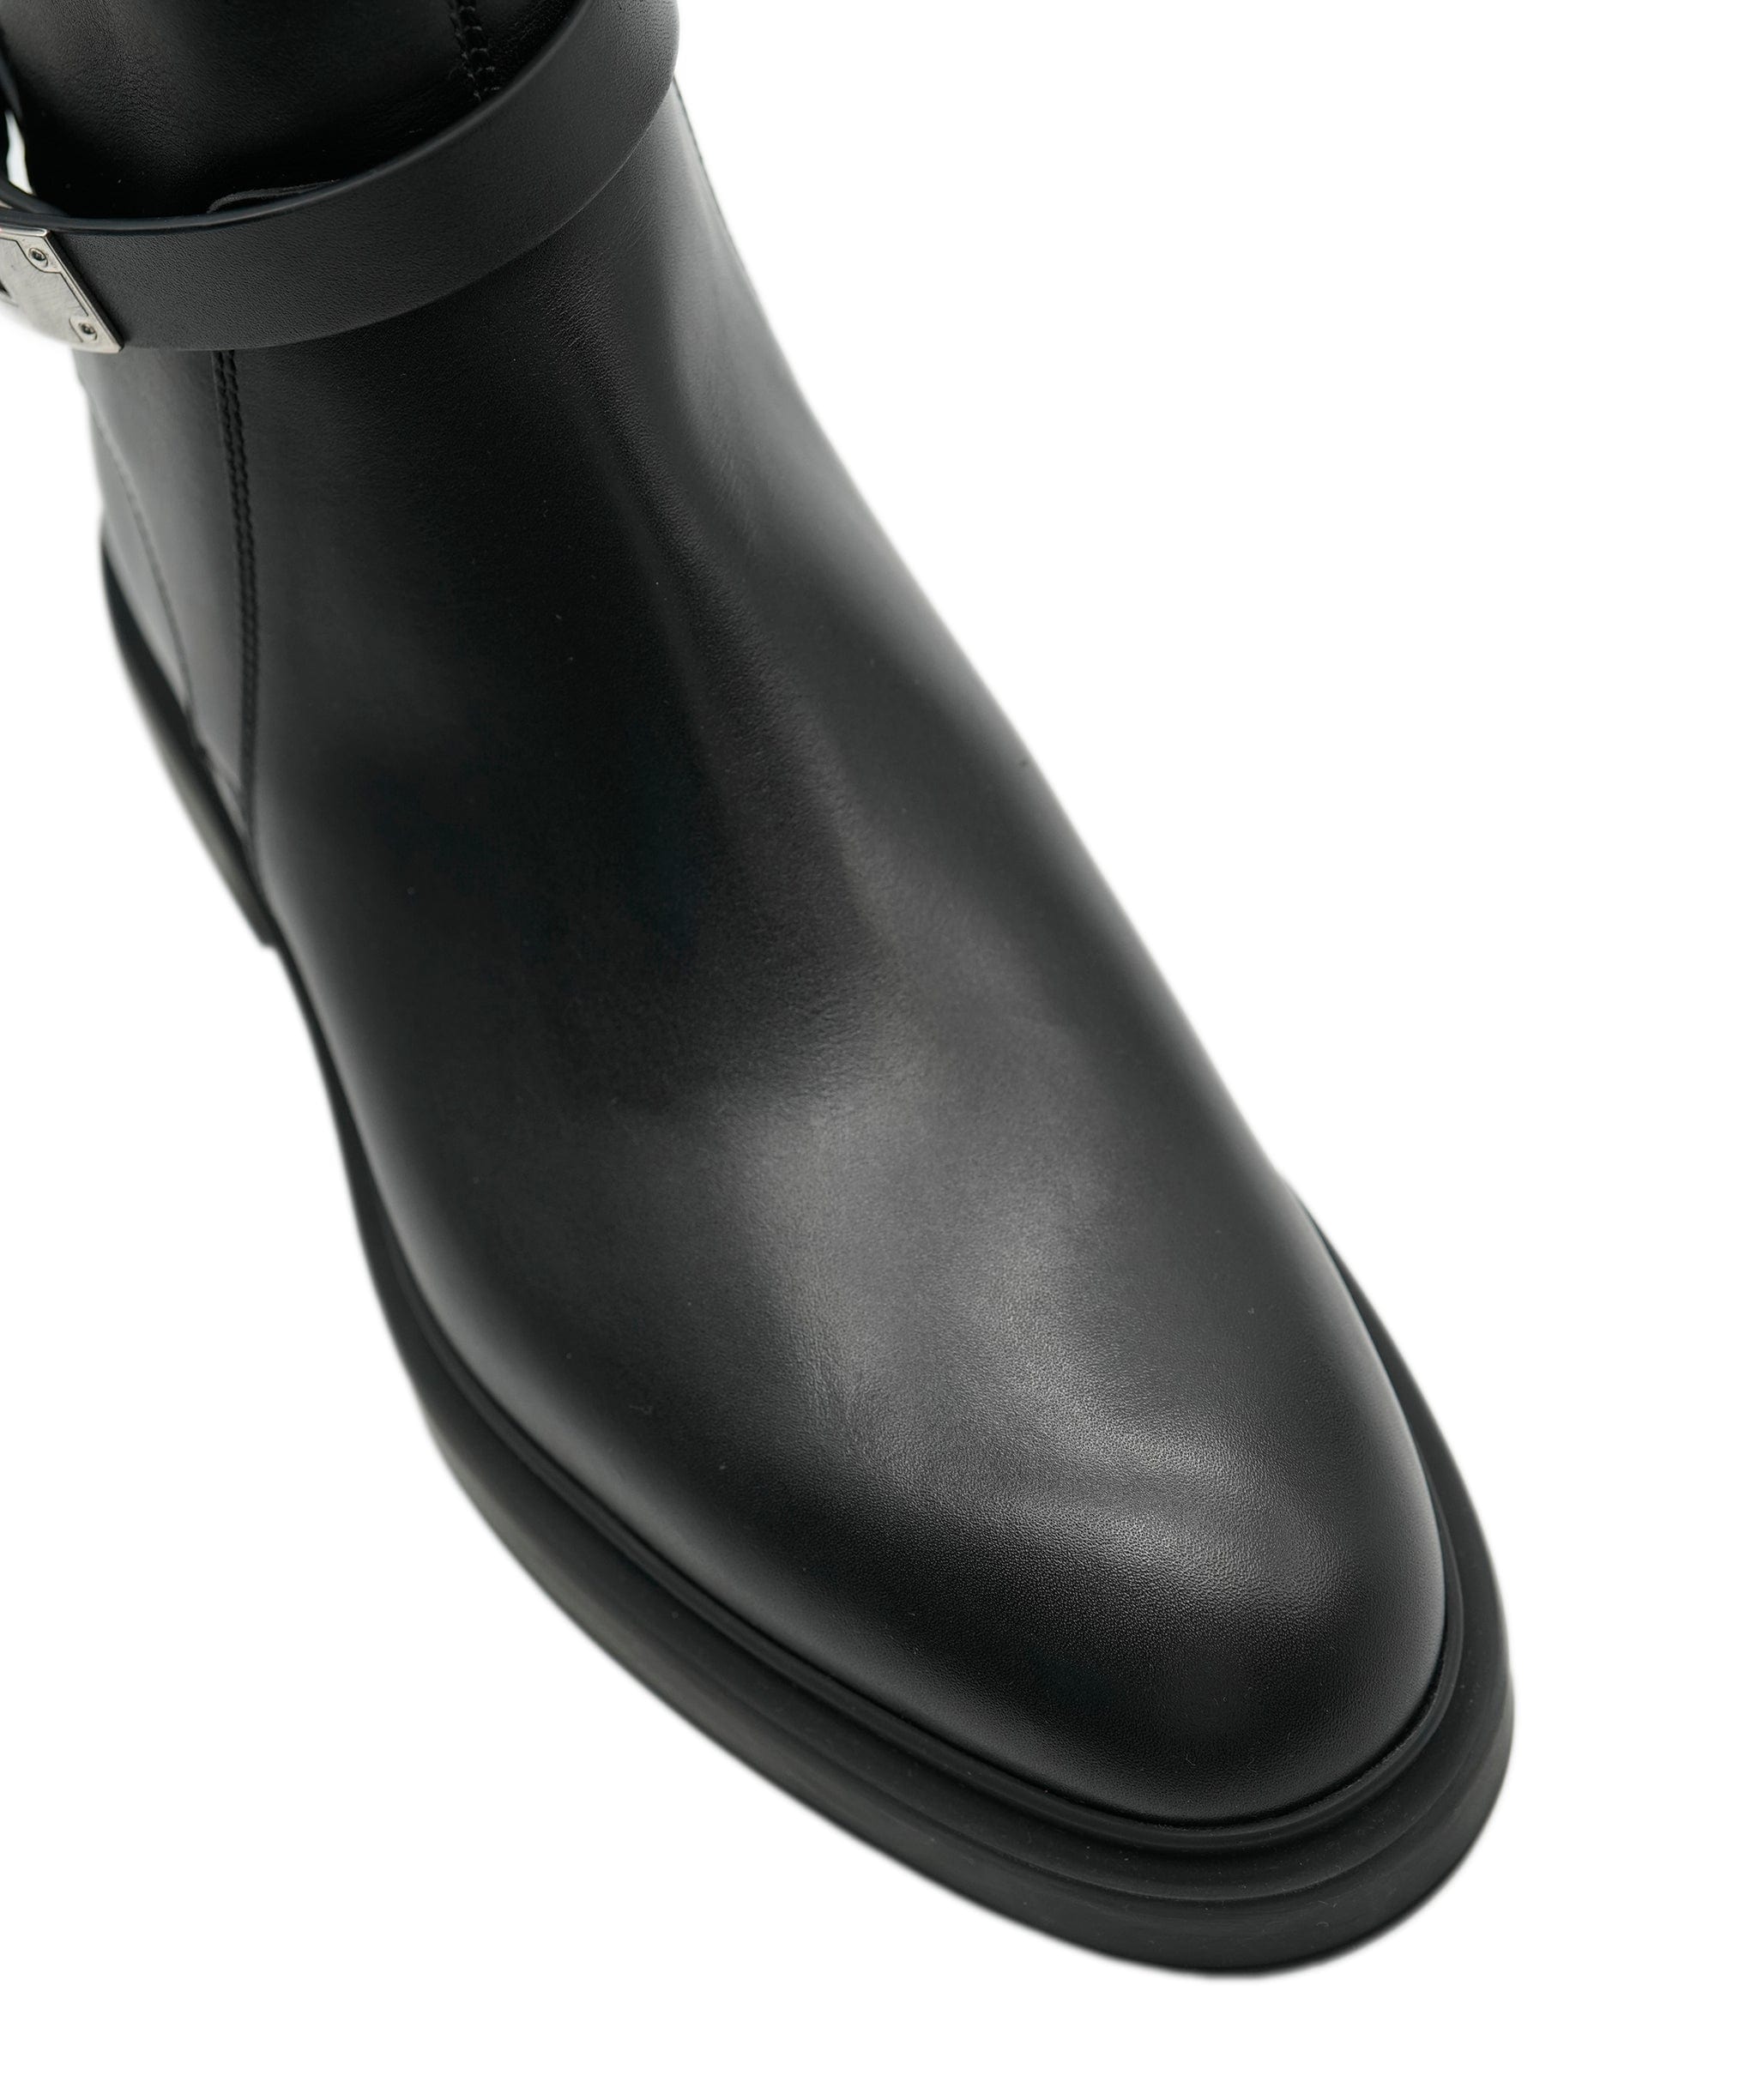 Hermès Hermes Kelly Short Boots  ALC1185